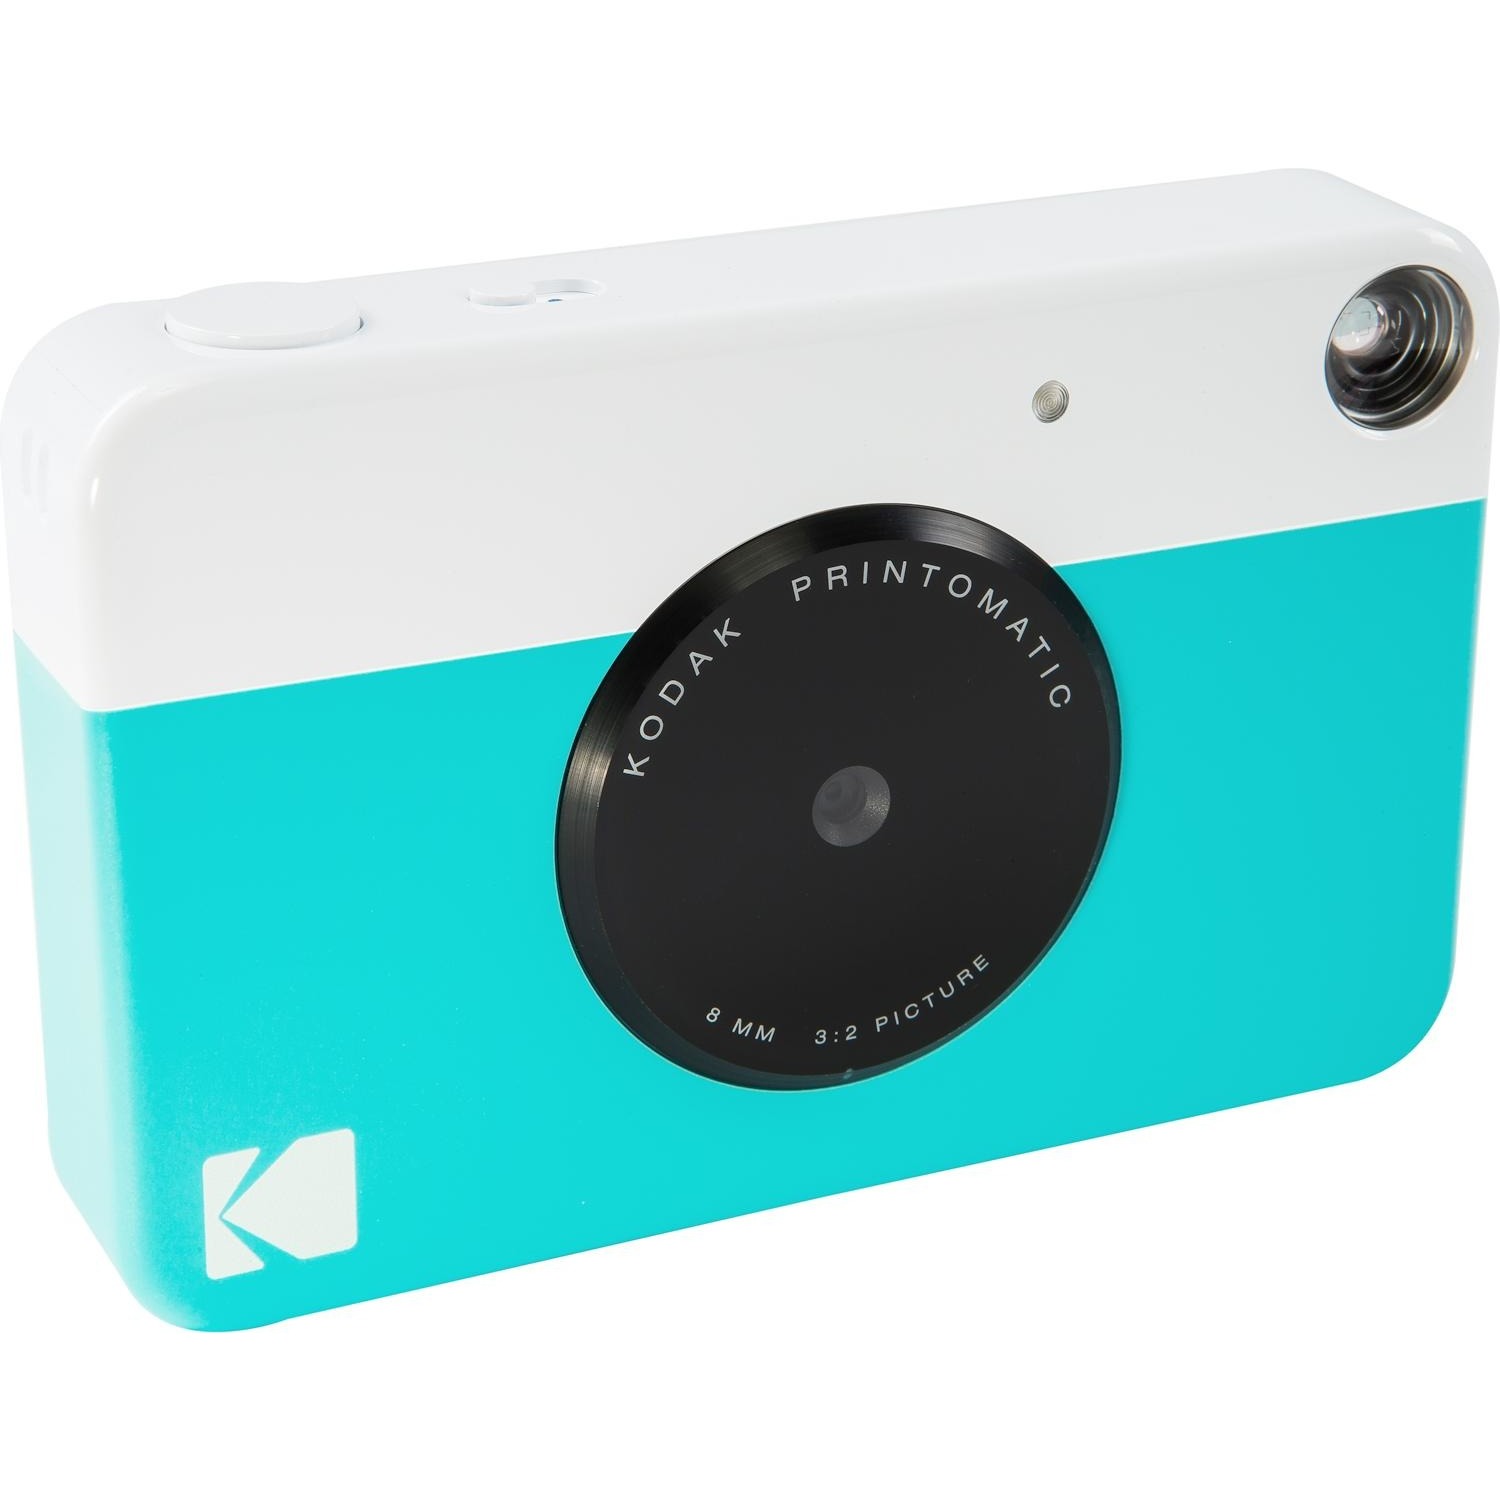 Fotocamera istantanea Kodak Printomatic colore blu - DIMOStore